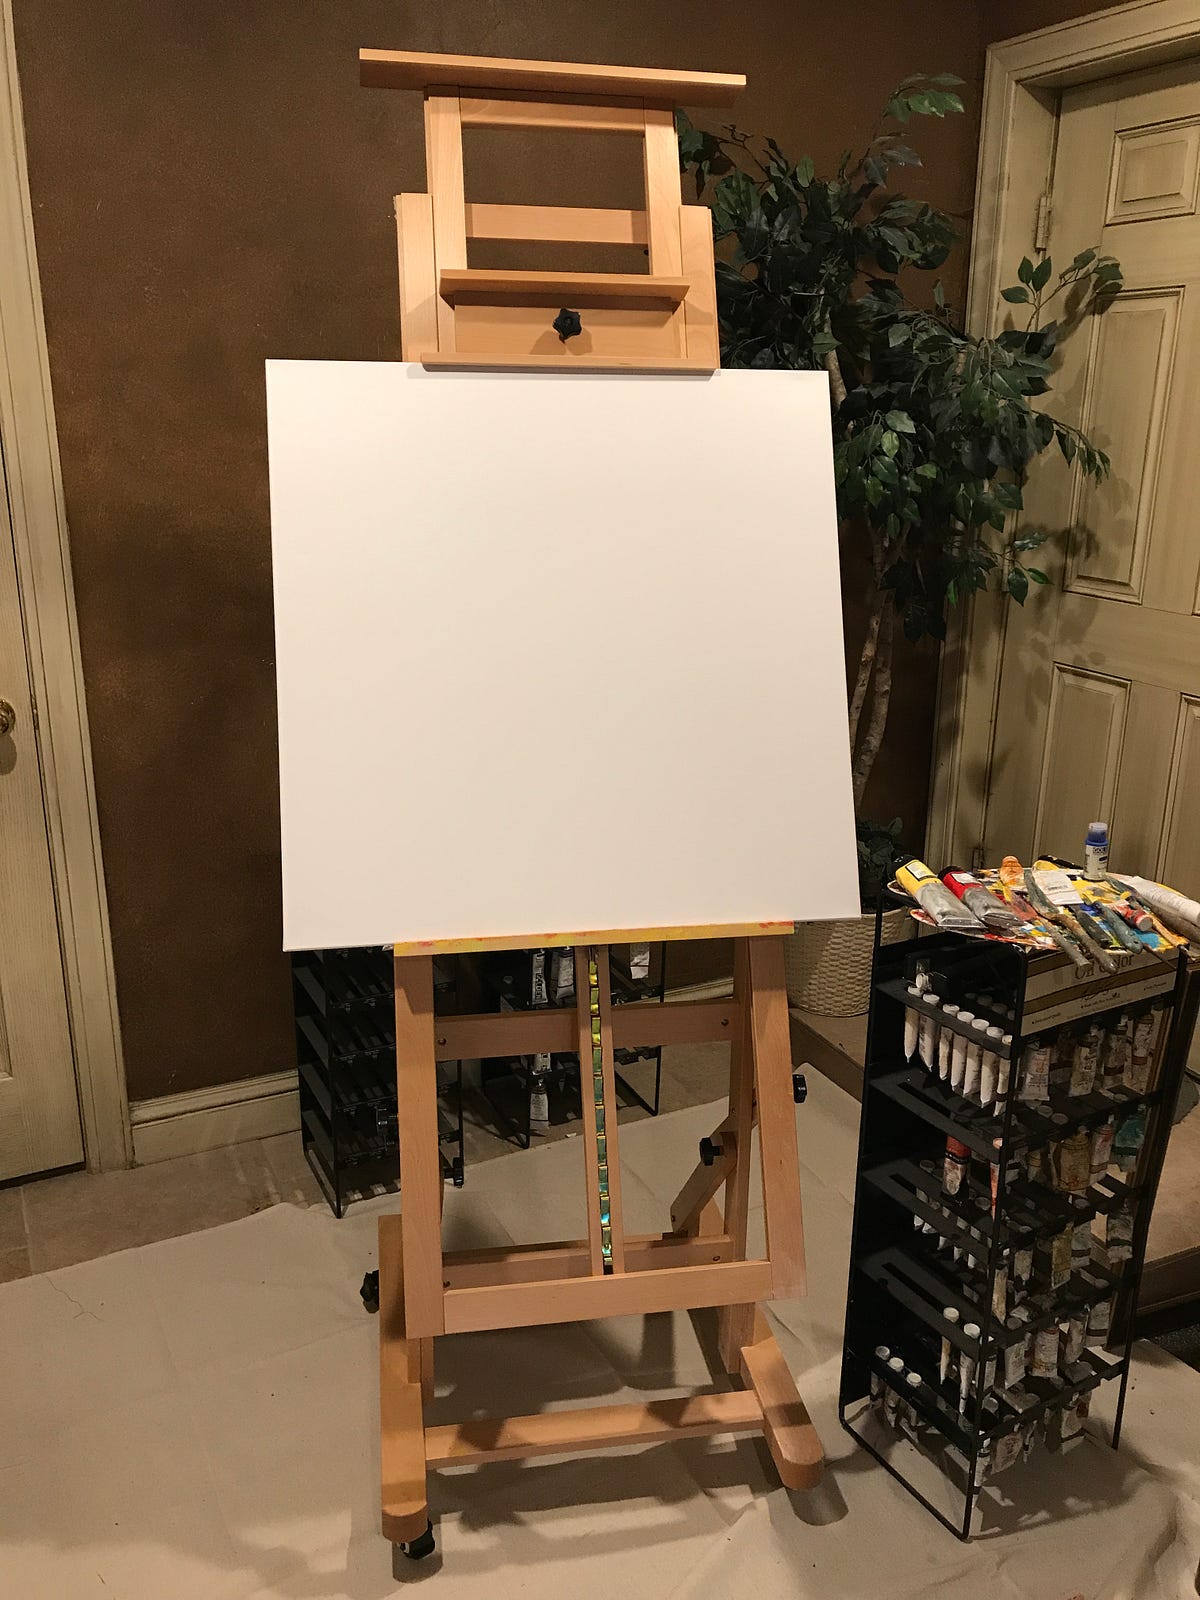 the beauty of a blank canvas. – THE LIFELONG LEARNER